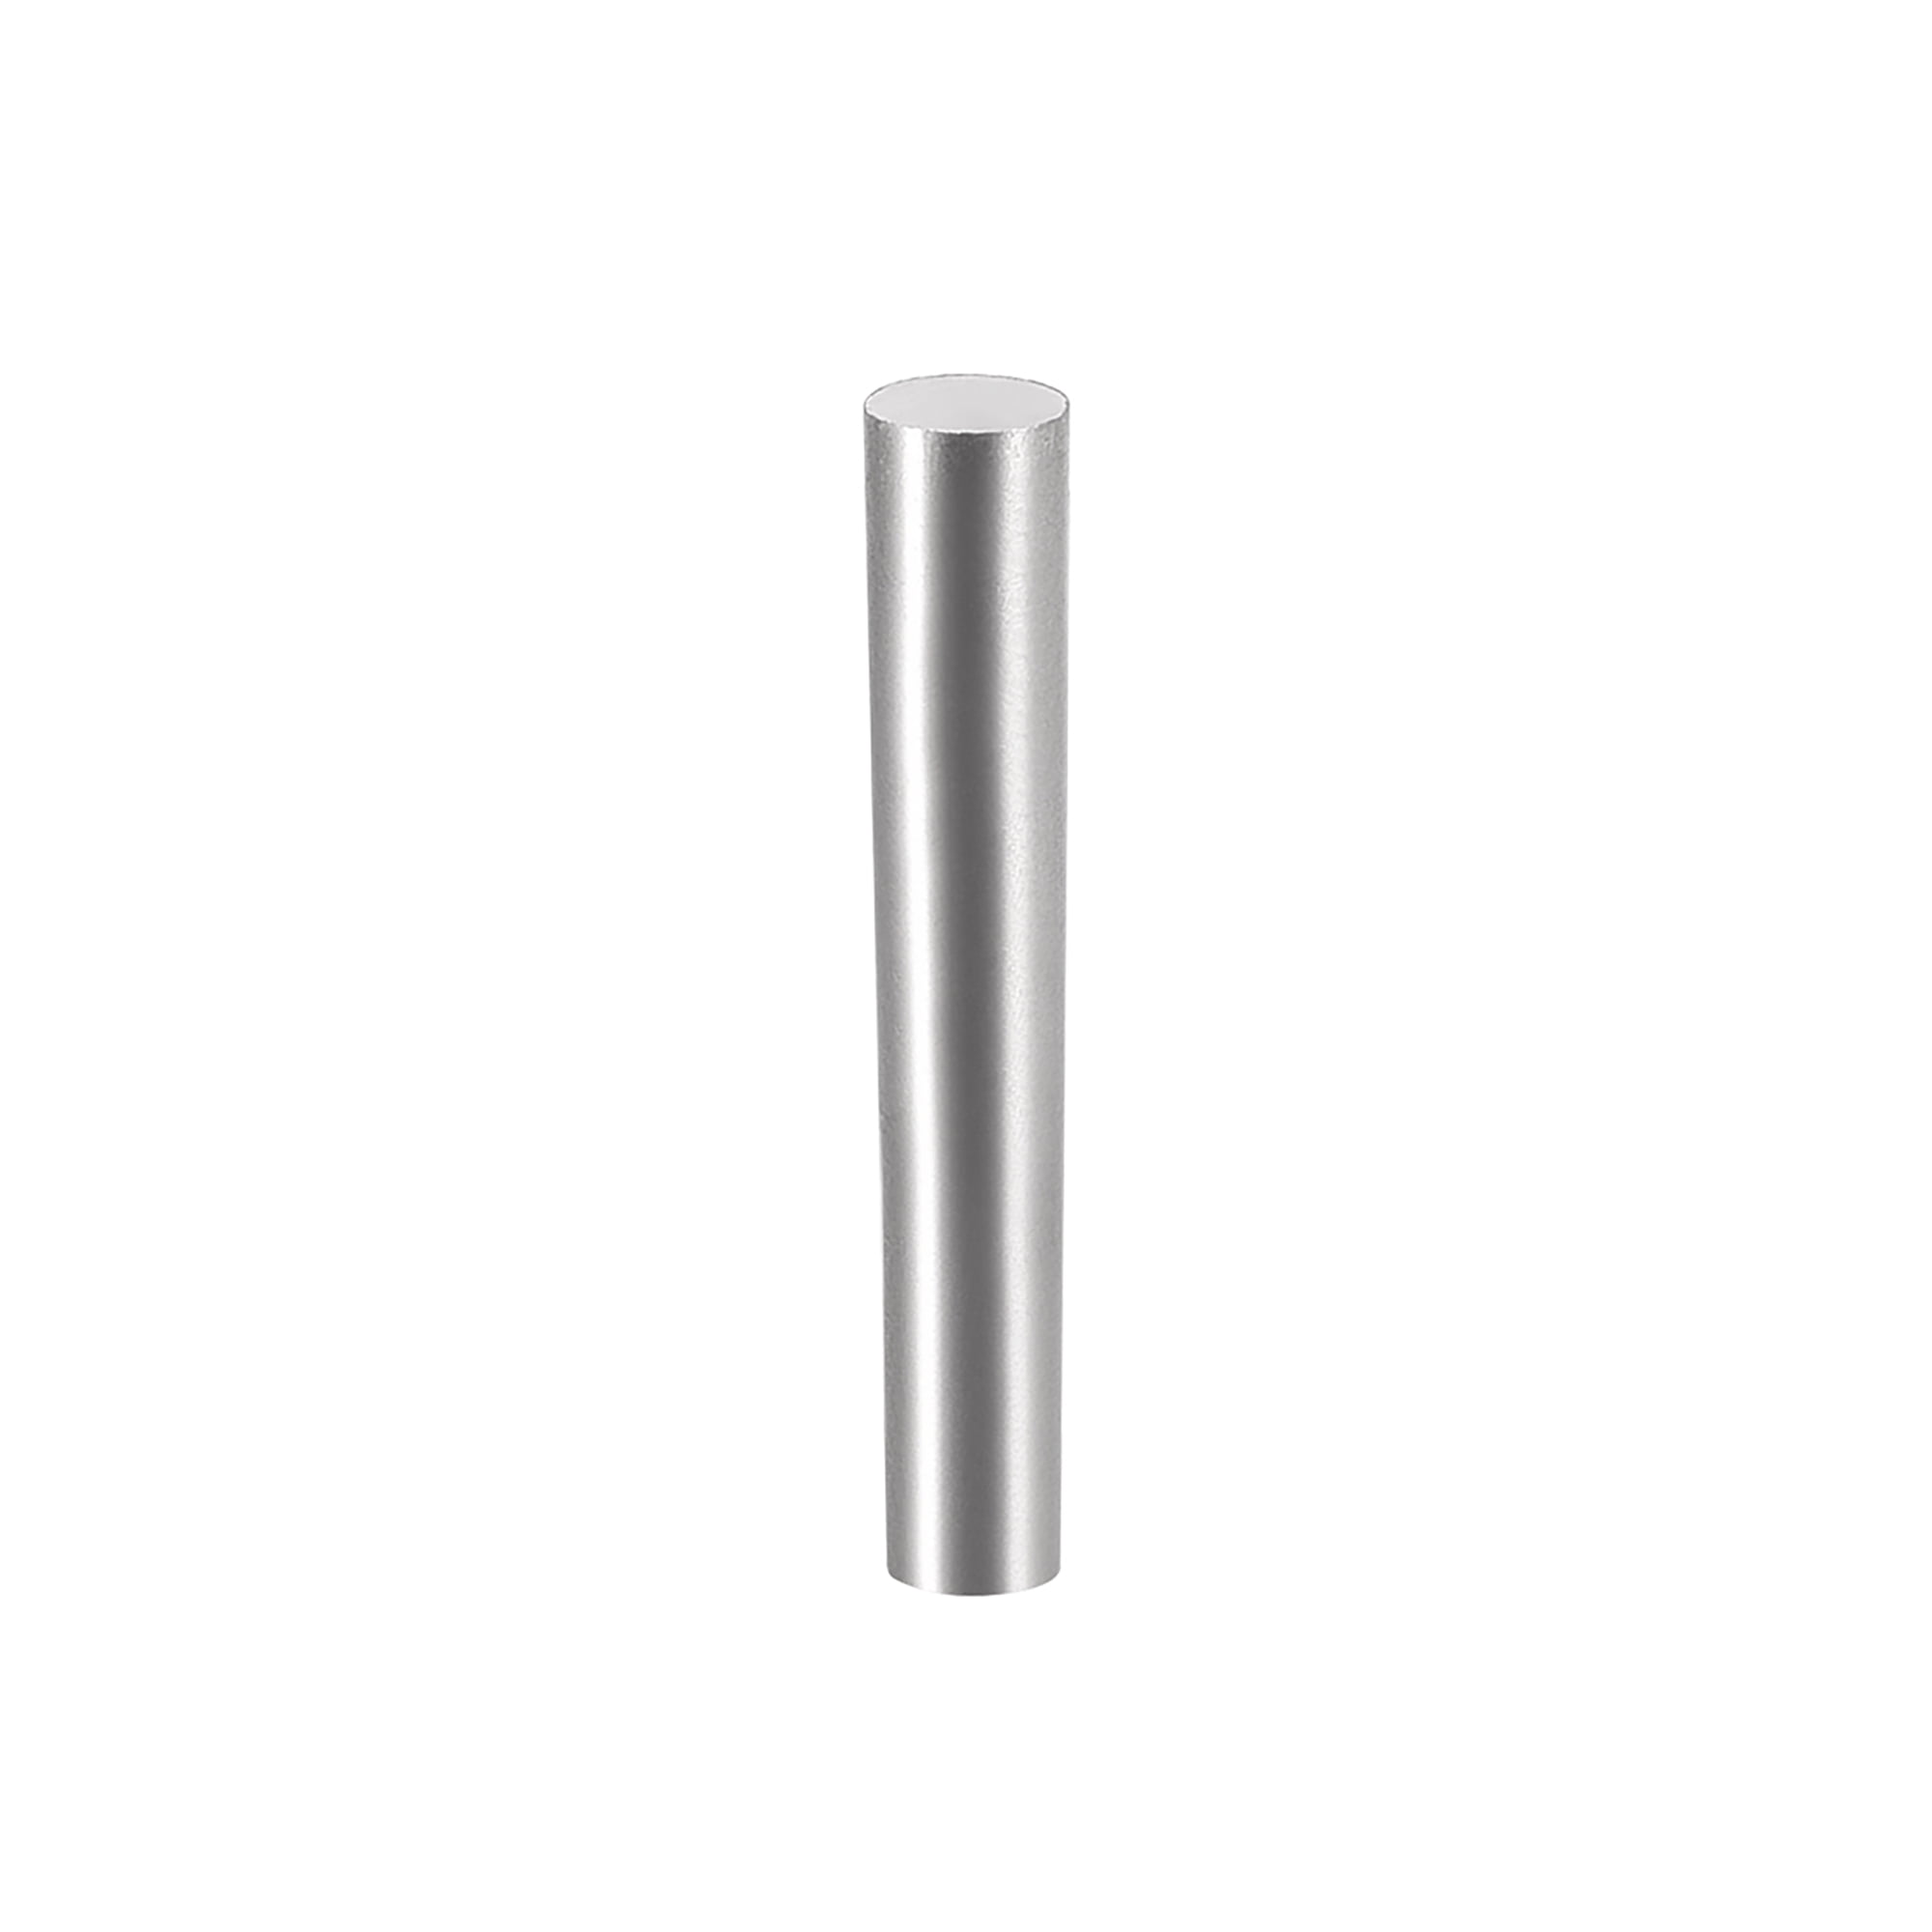 2Pcs 4mm x 30mm 1:50 Taper Pin 304 Stainless Steel Shelf Support Pin Fasten 